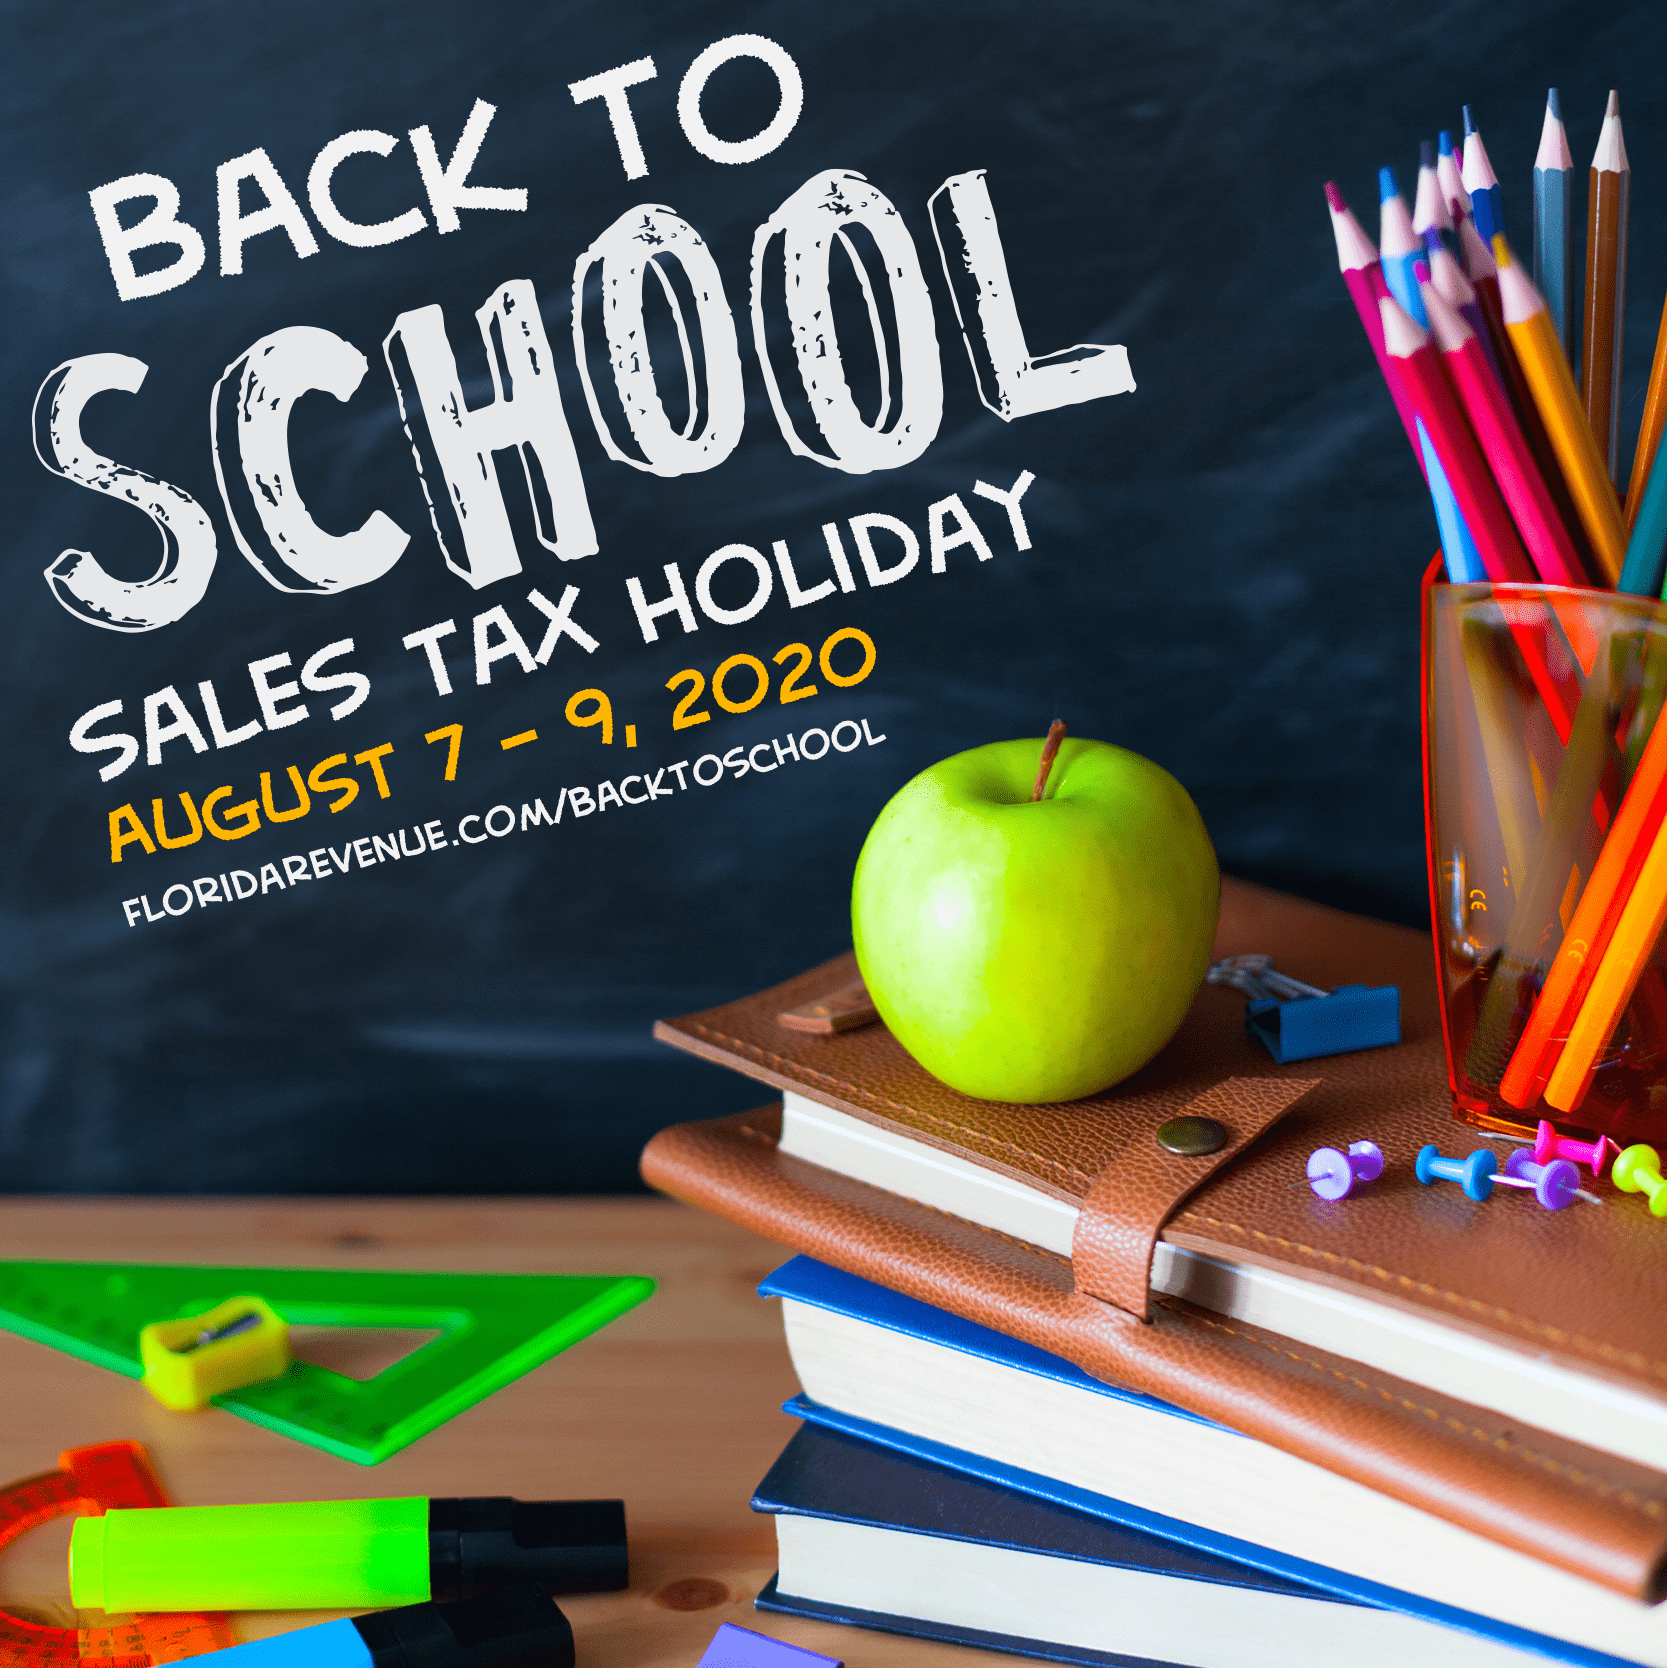 Backtoschool sales tax holiday August 79 Alachua Chronicle